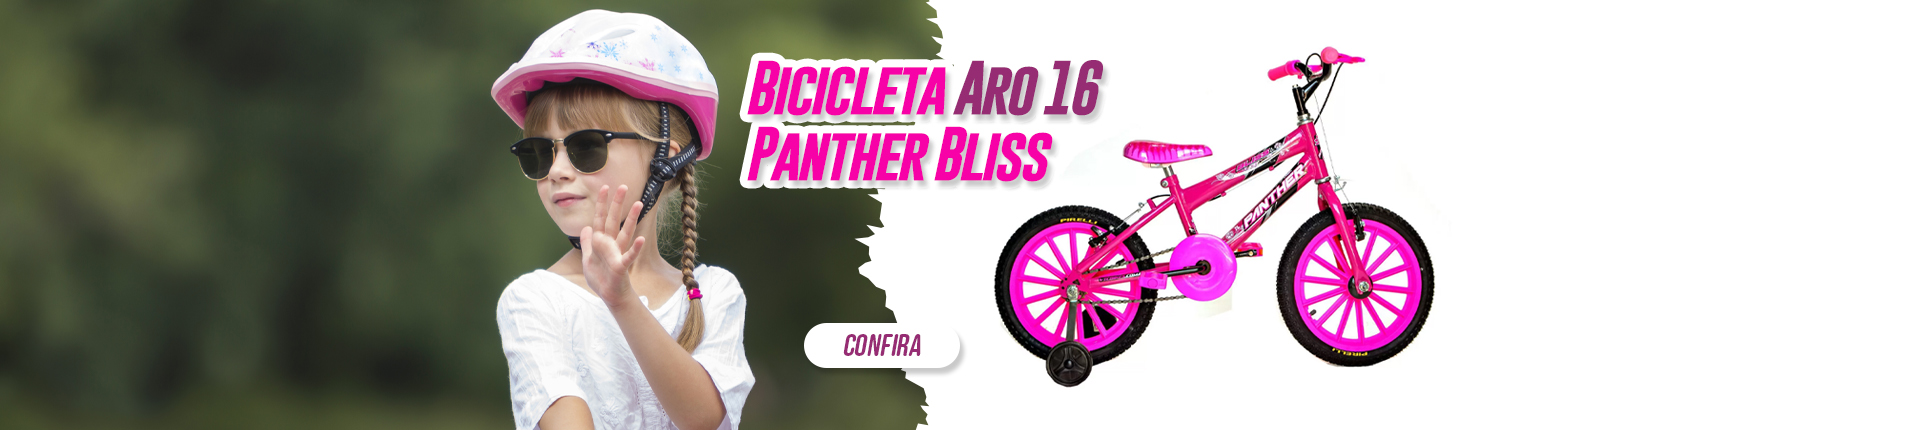 LDE - Bicicleta aro 16 Panther Bliss